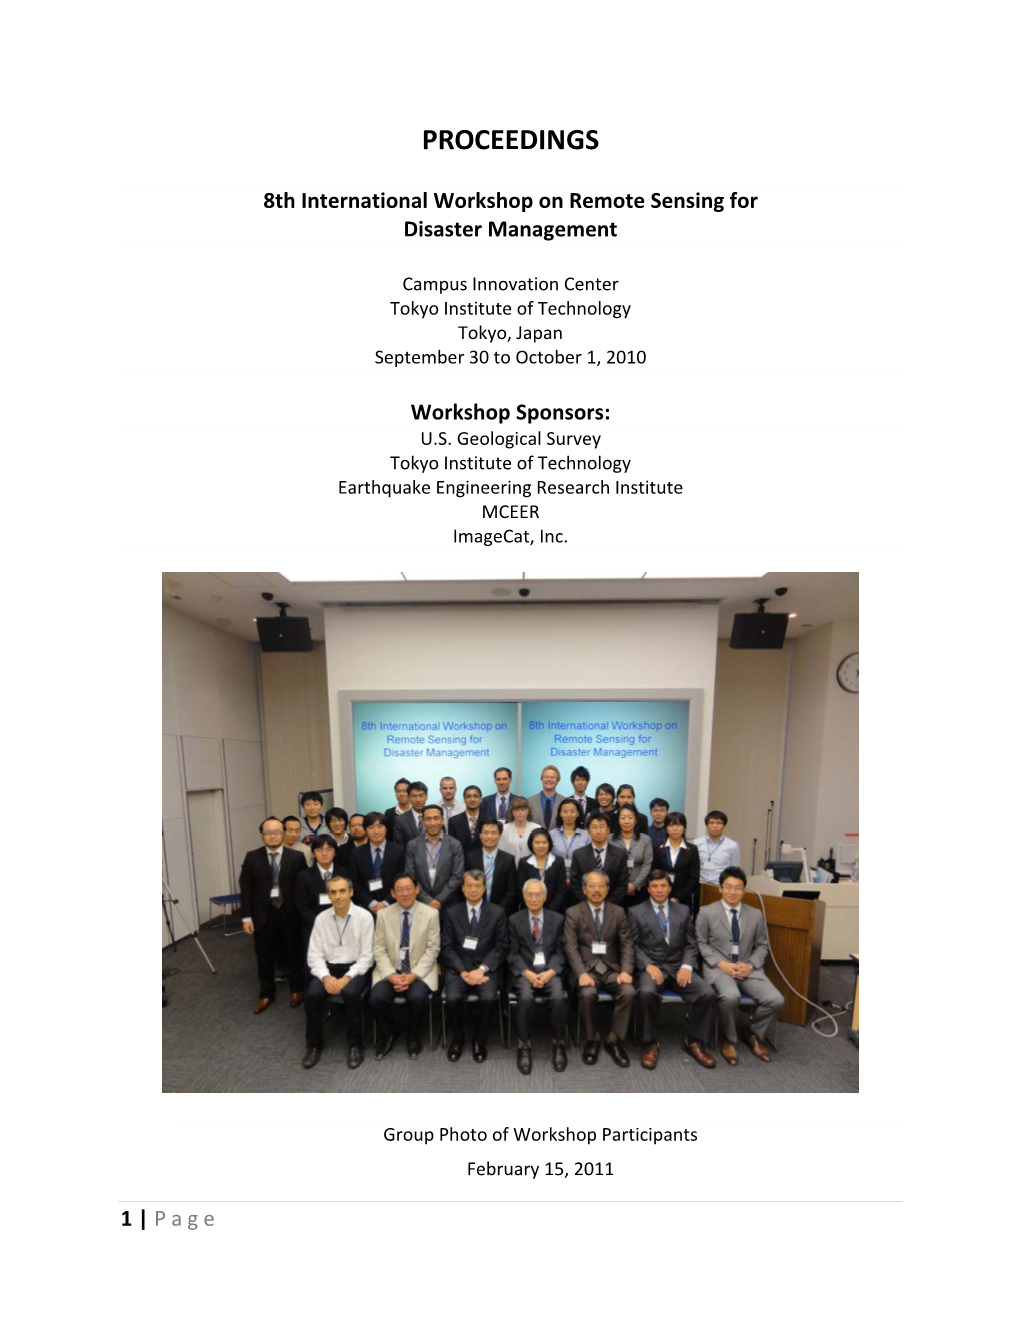 Sixth International Workshop on Remote Sensing for Disaster